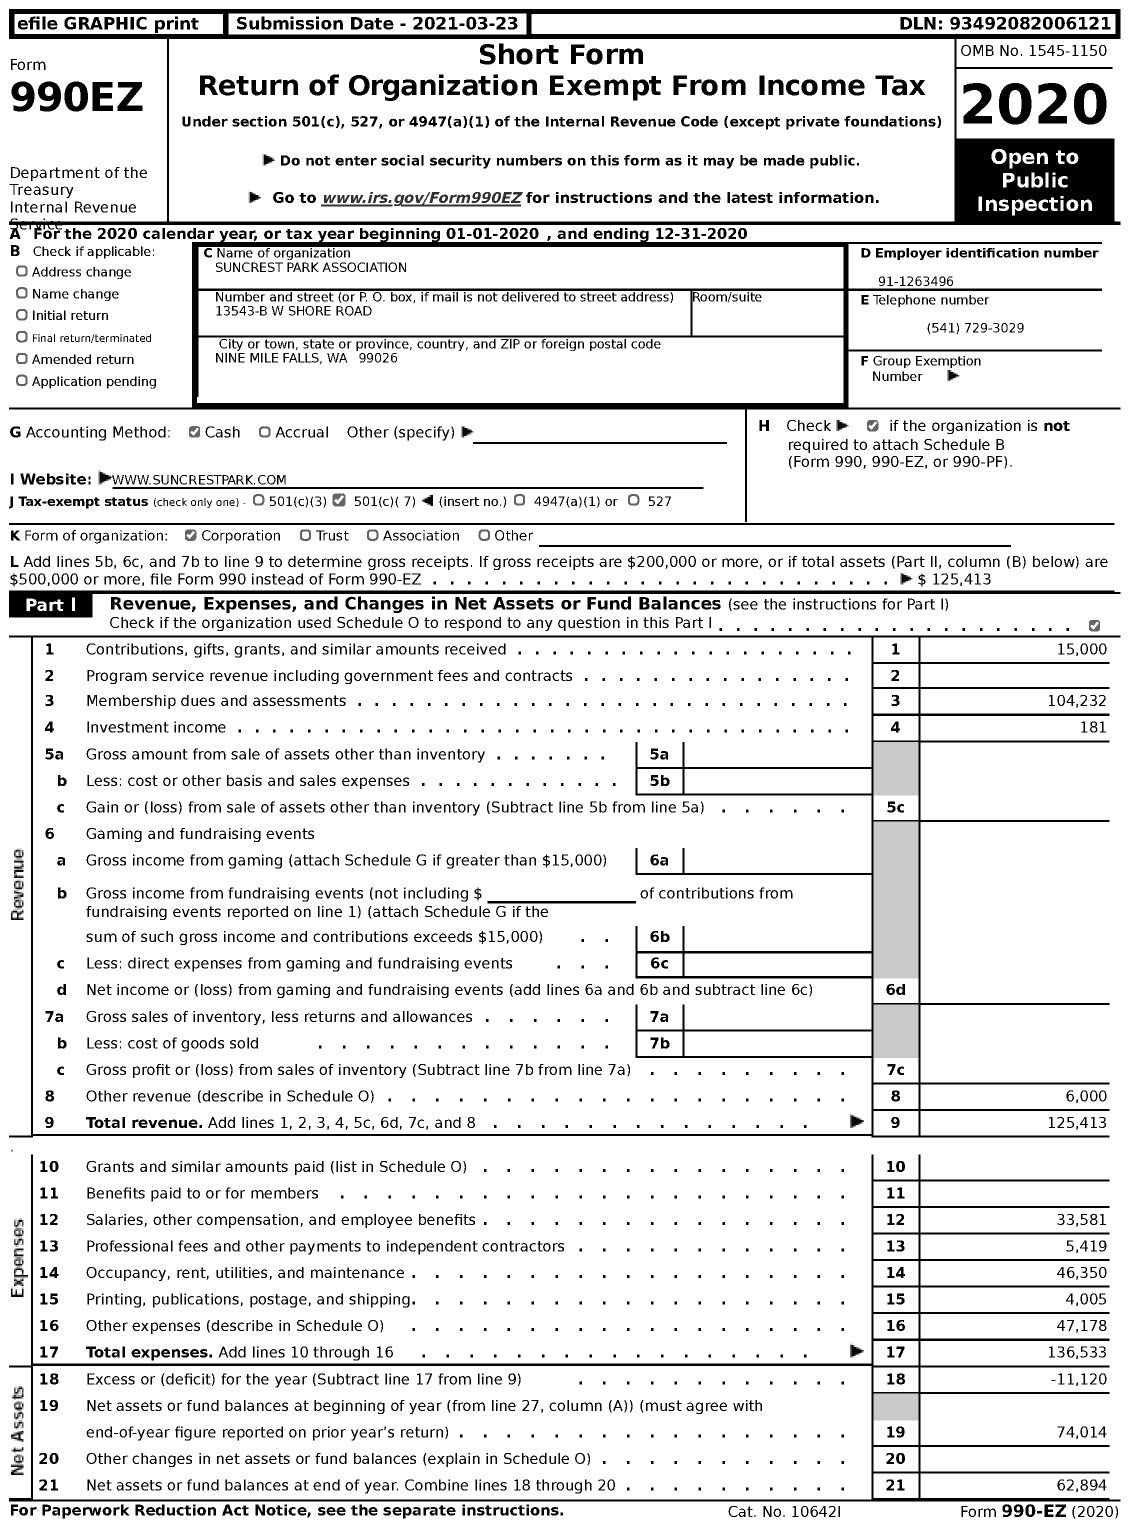 Image of first page of 2020 Form 990EZ for Suncrest Park Association